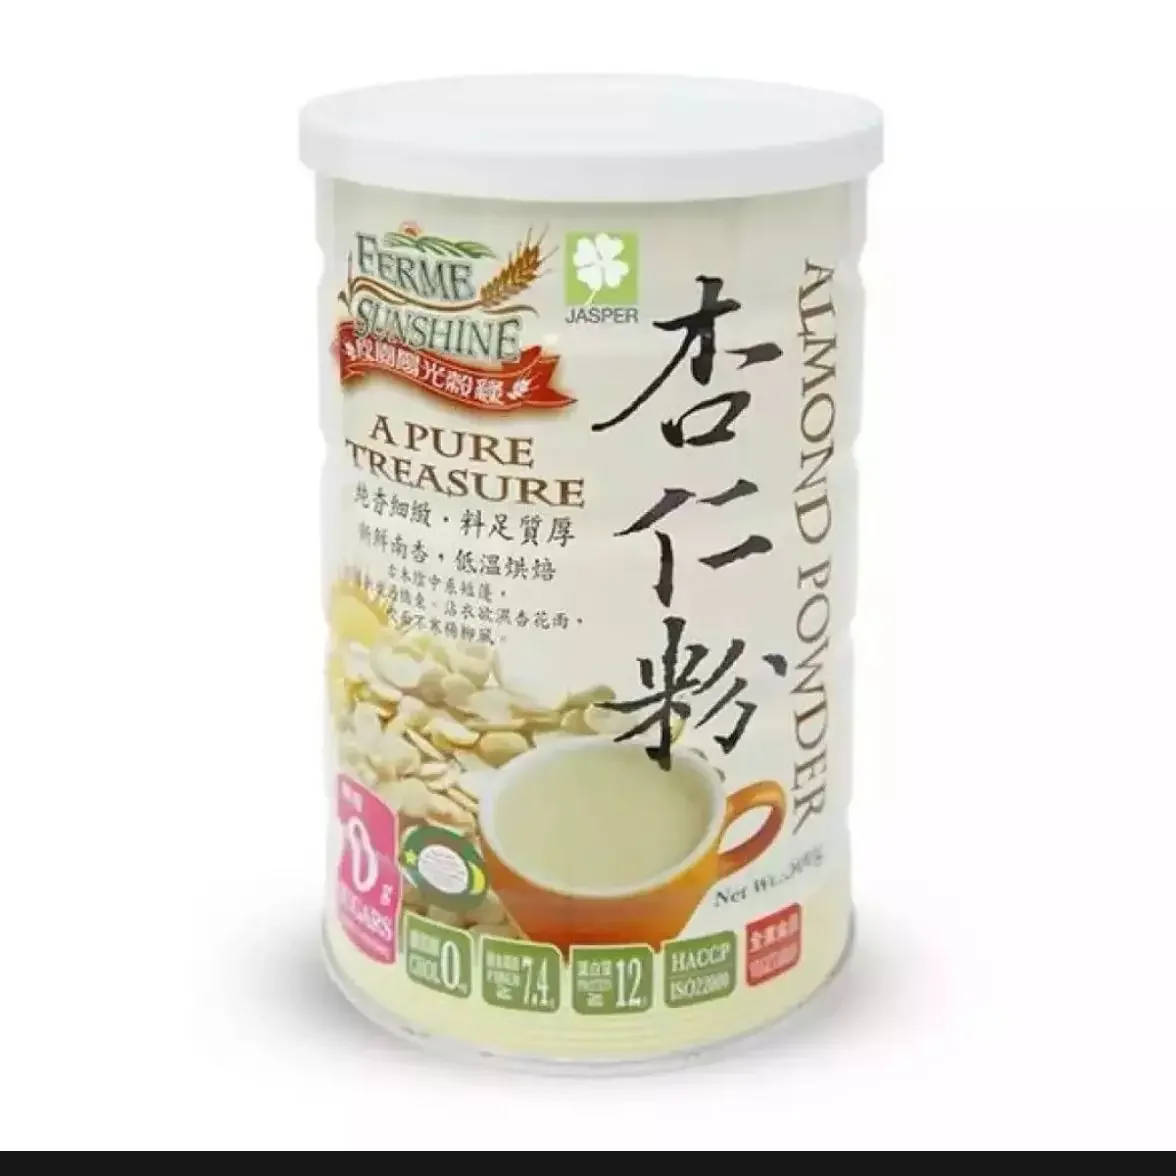 ferme sunshine almond powder no suger500g